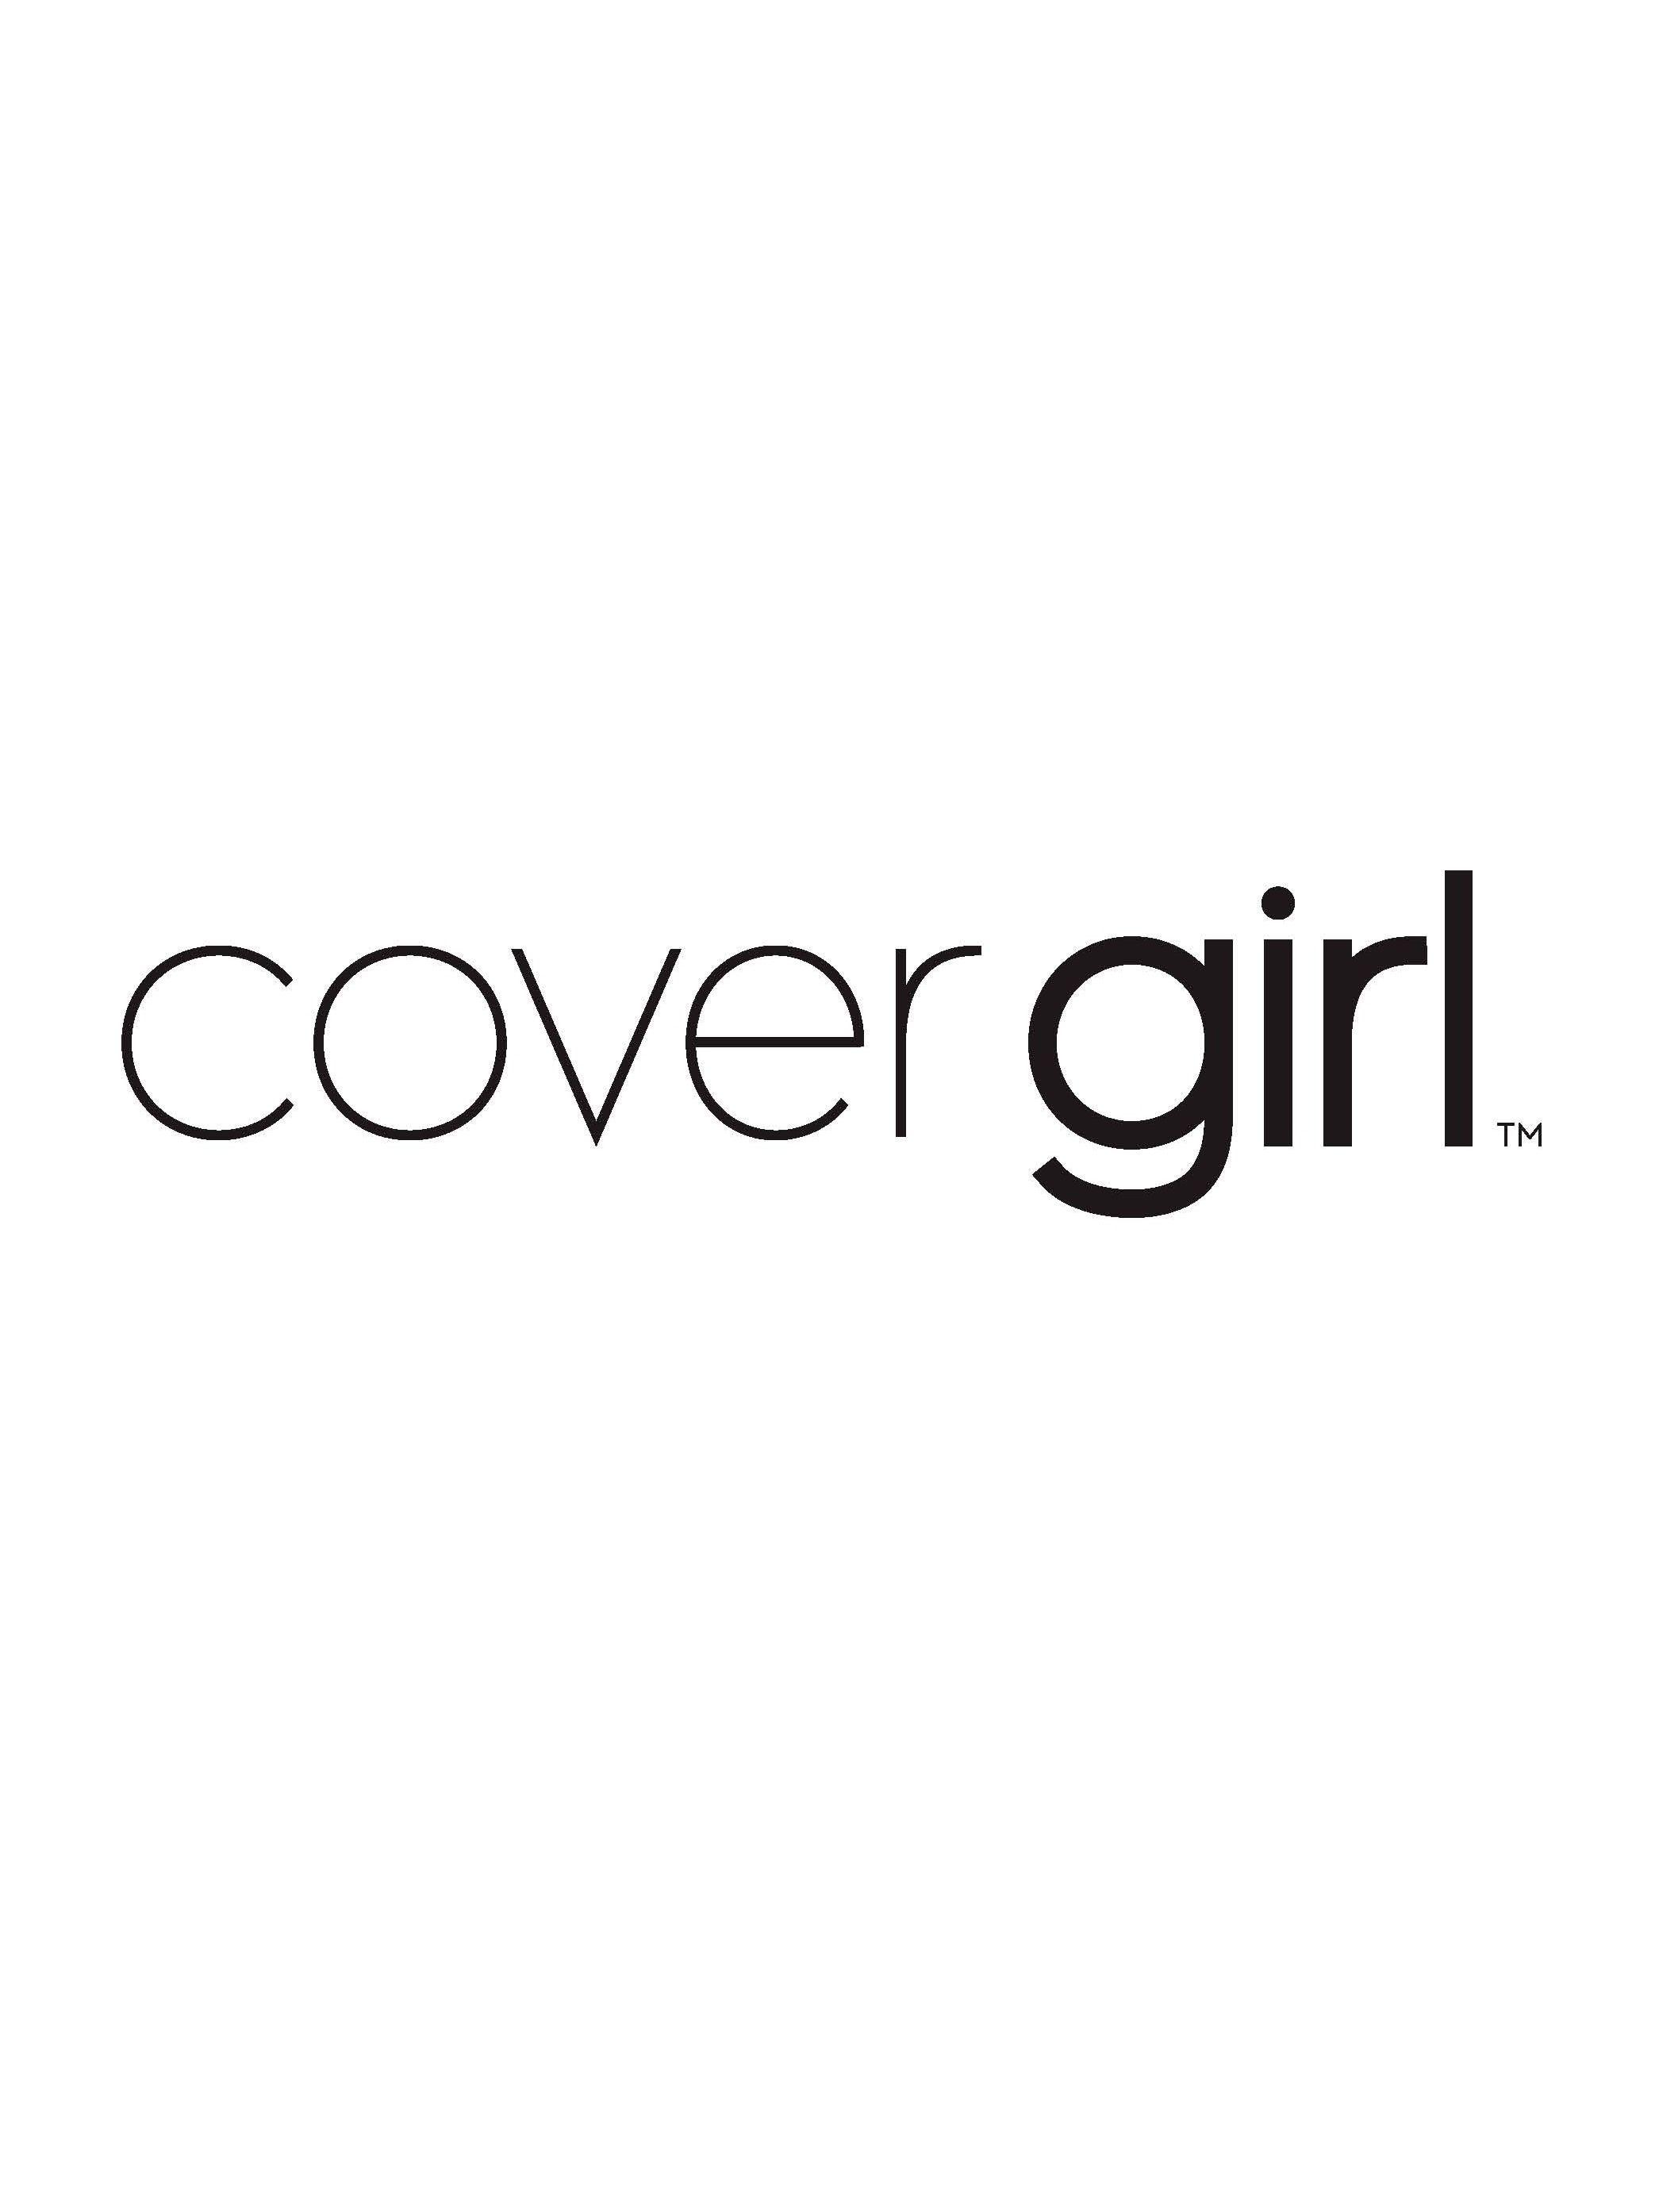 Cover Girl Logo - Covergirl logo - Accessories Magazine